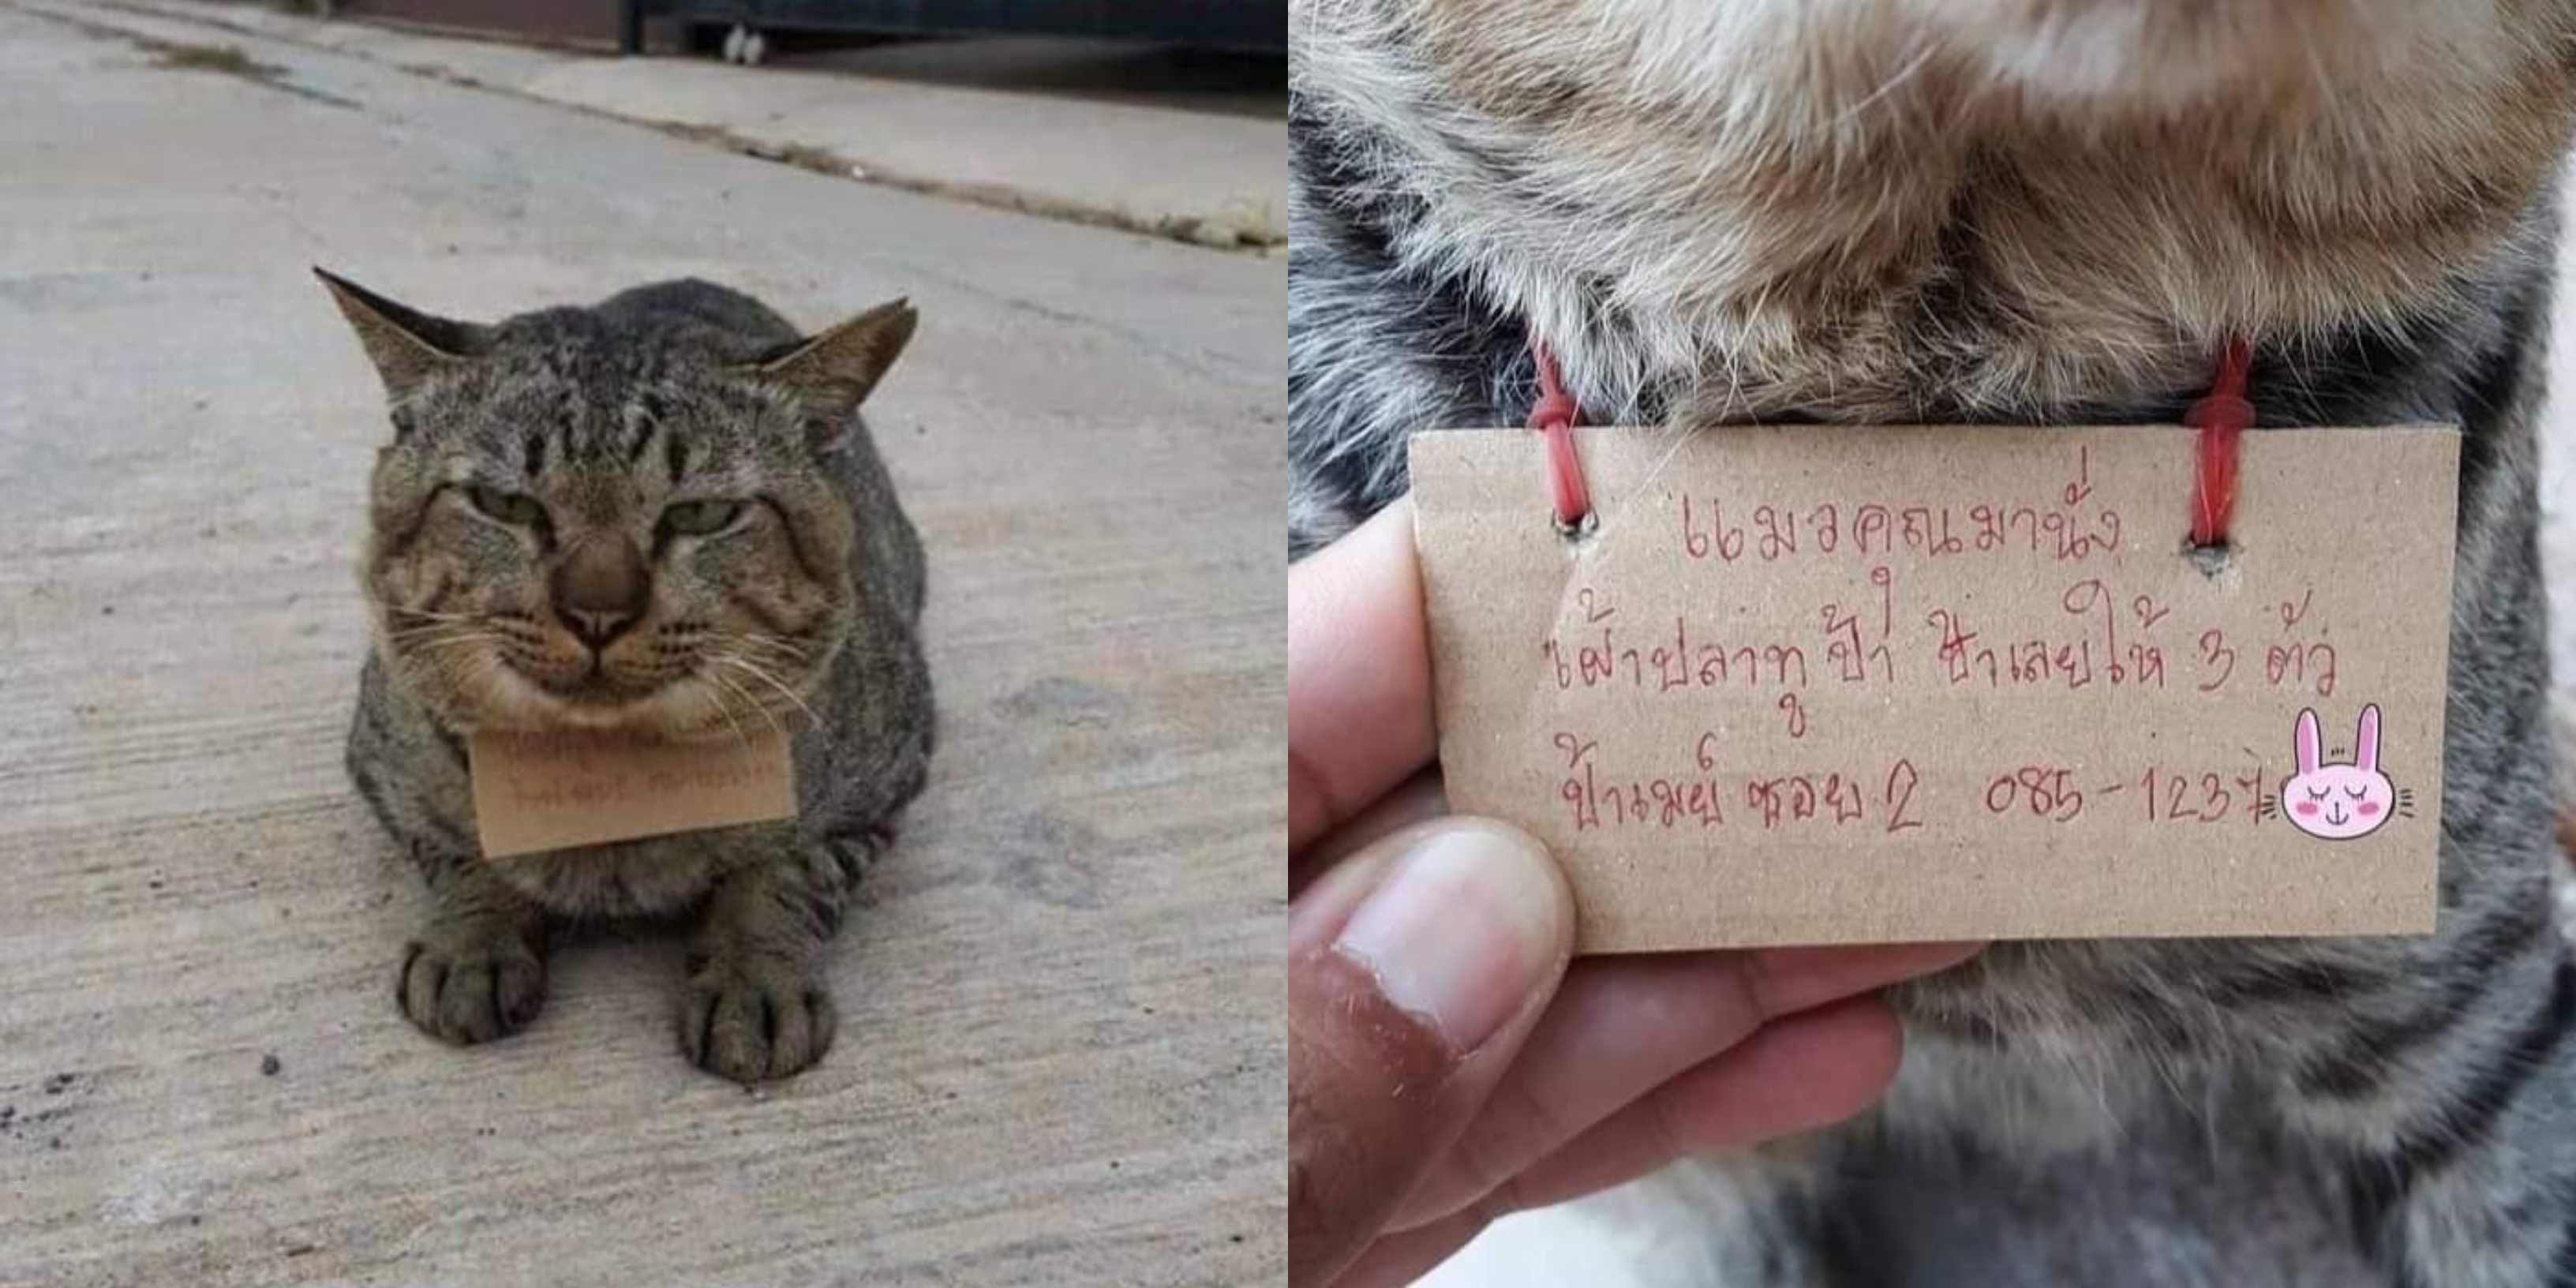 3 Hari Menghilang, Kucing Kembali Bersama Nota ‘Hutang’ Di Leher Hiburkan Netizen